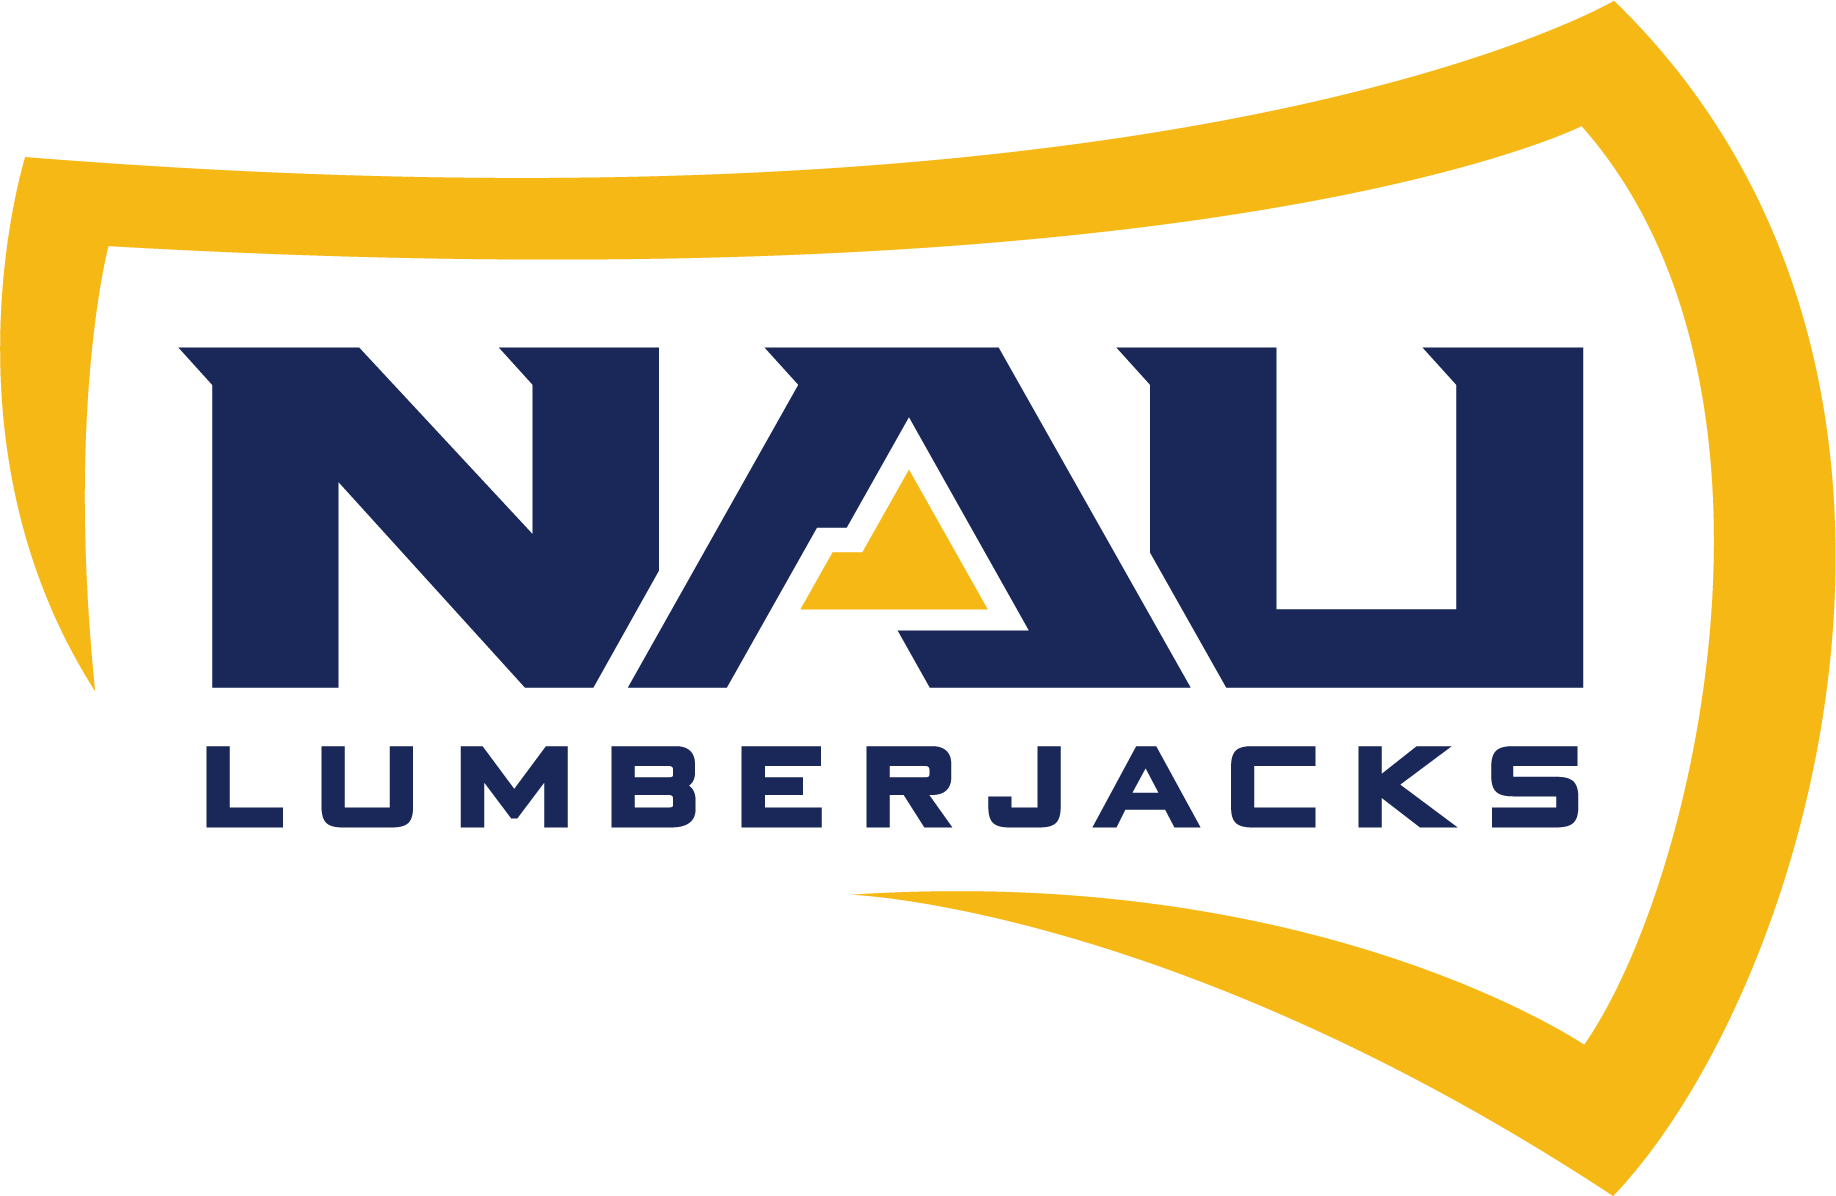 Northern Arizona University's primary axe "Lumberjacks" logo, featuring true blue and gold.